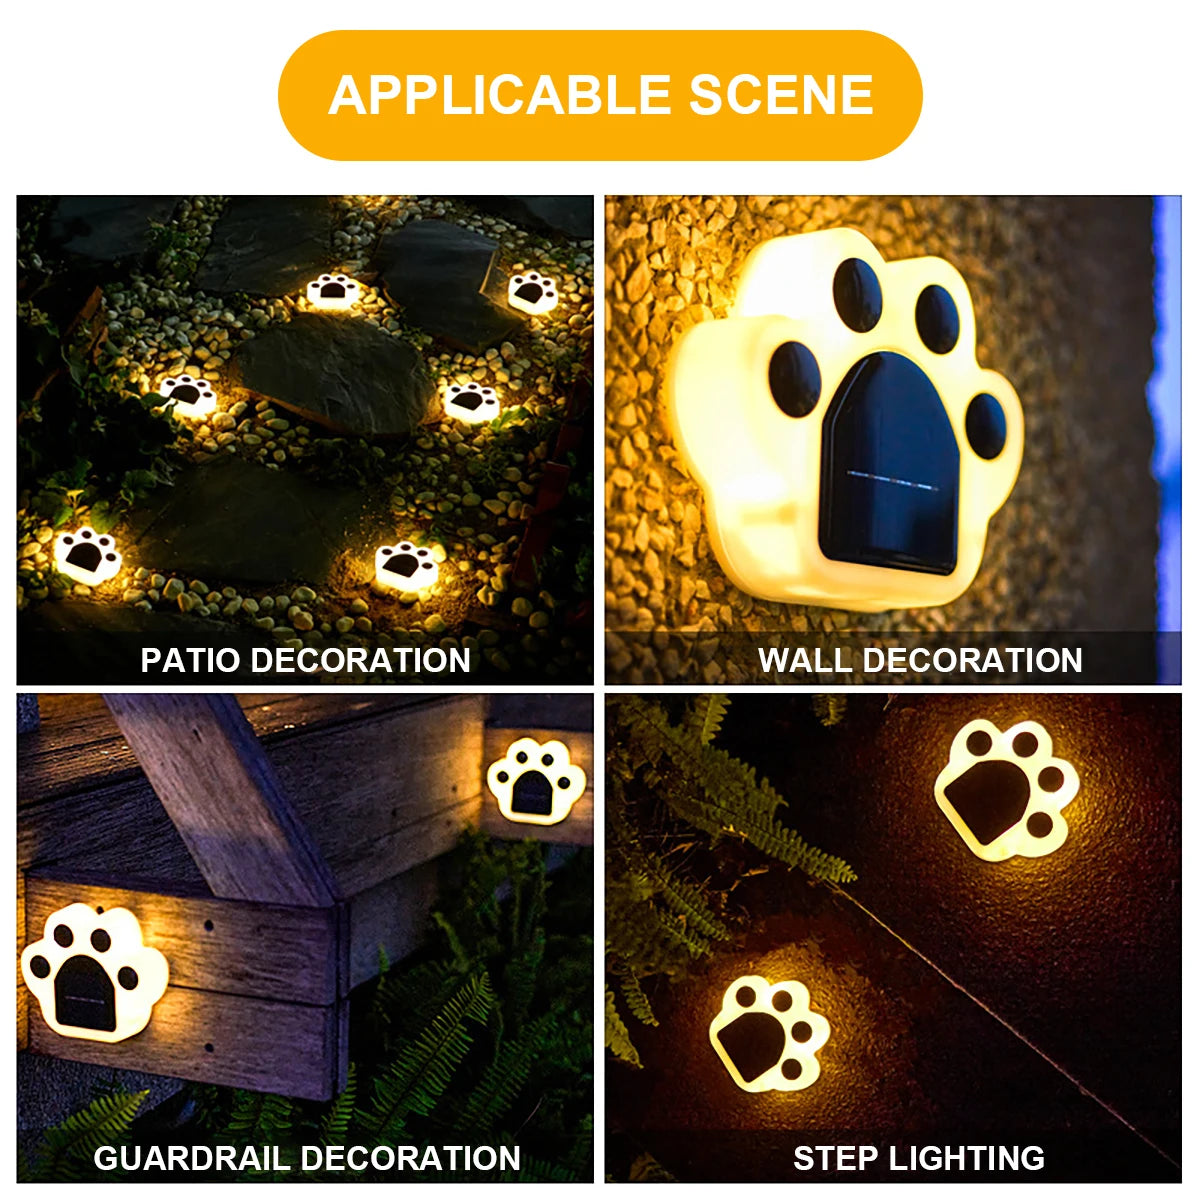 Bear Paw Solar LED Garden Night Lights are an Outdoor Christmas Delight